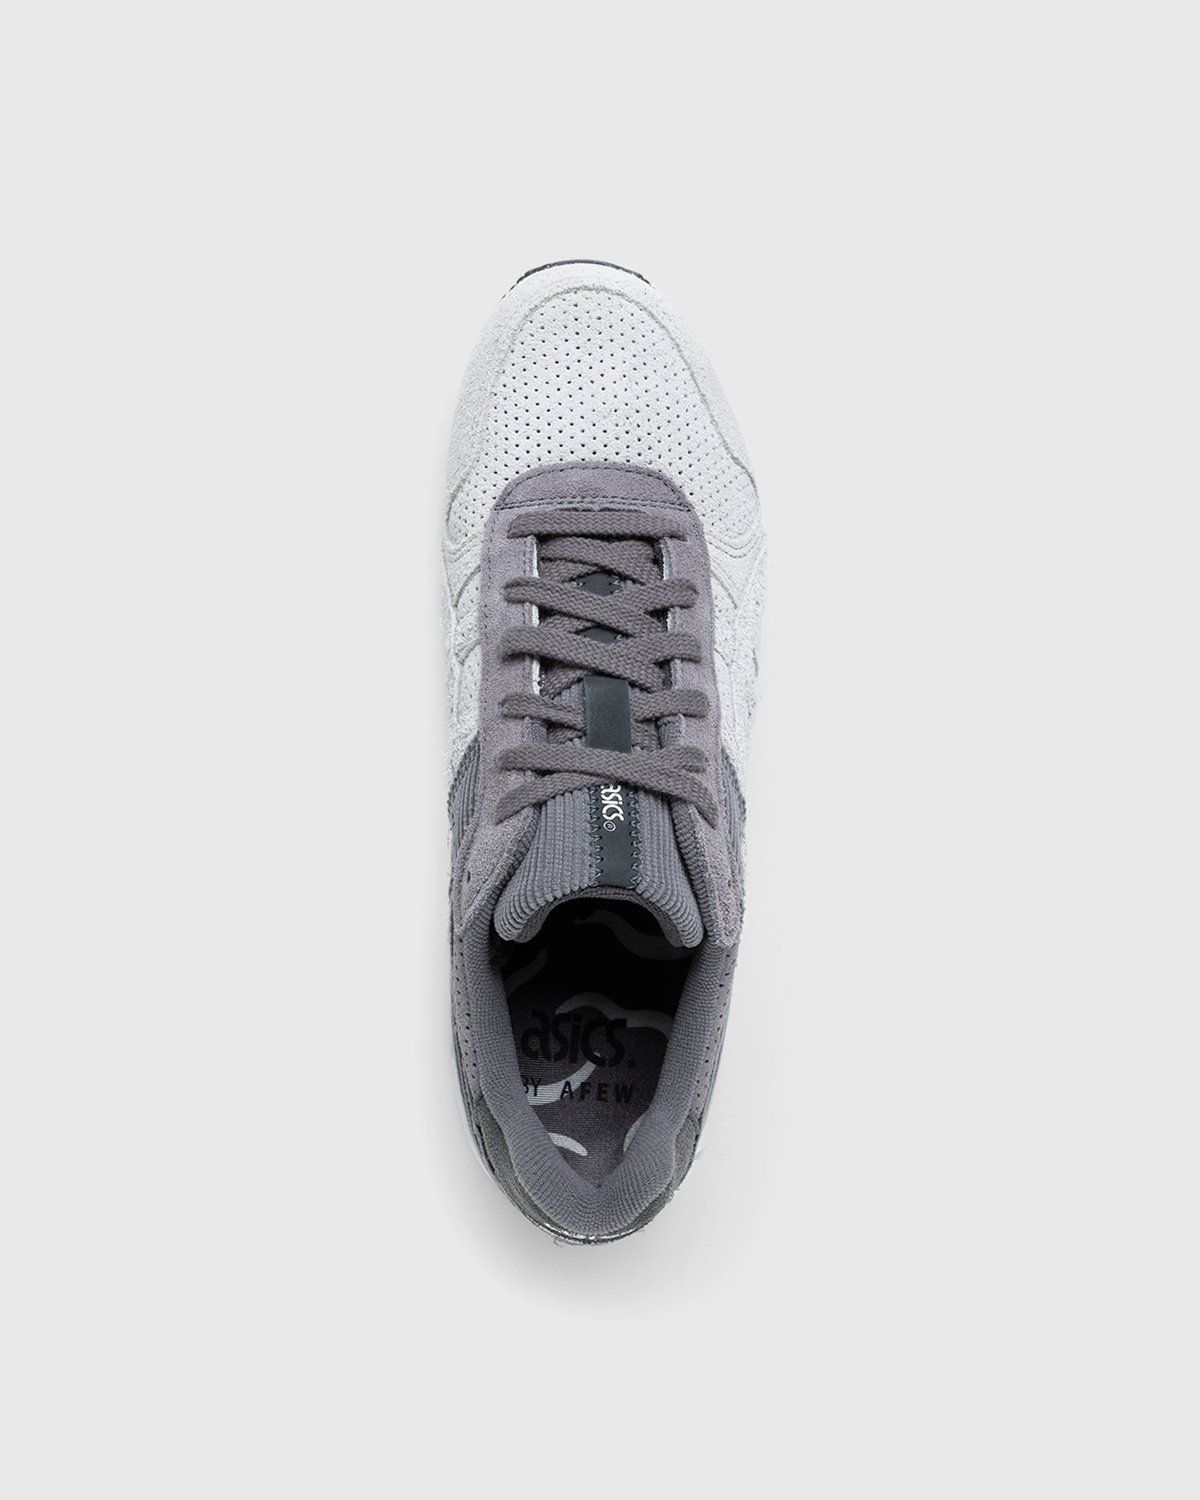 asics x Afew – GT-II Polar Shade/Carbon - Low Top Sneakers - Grey - Image 5